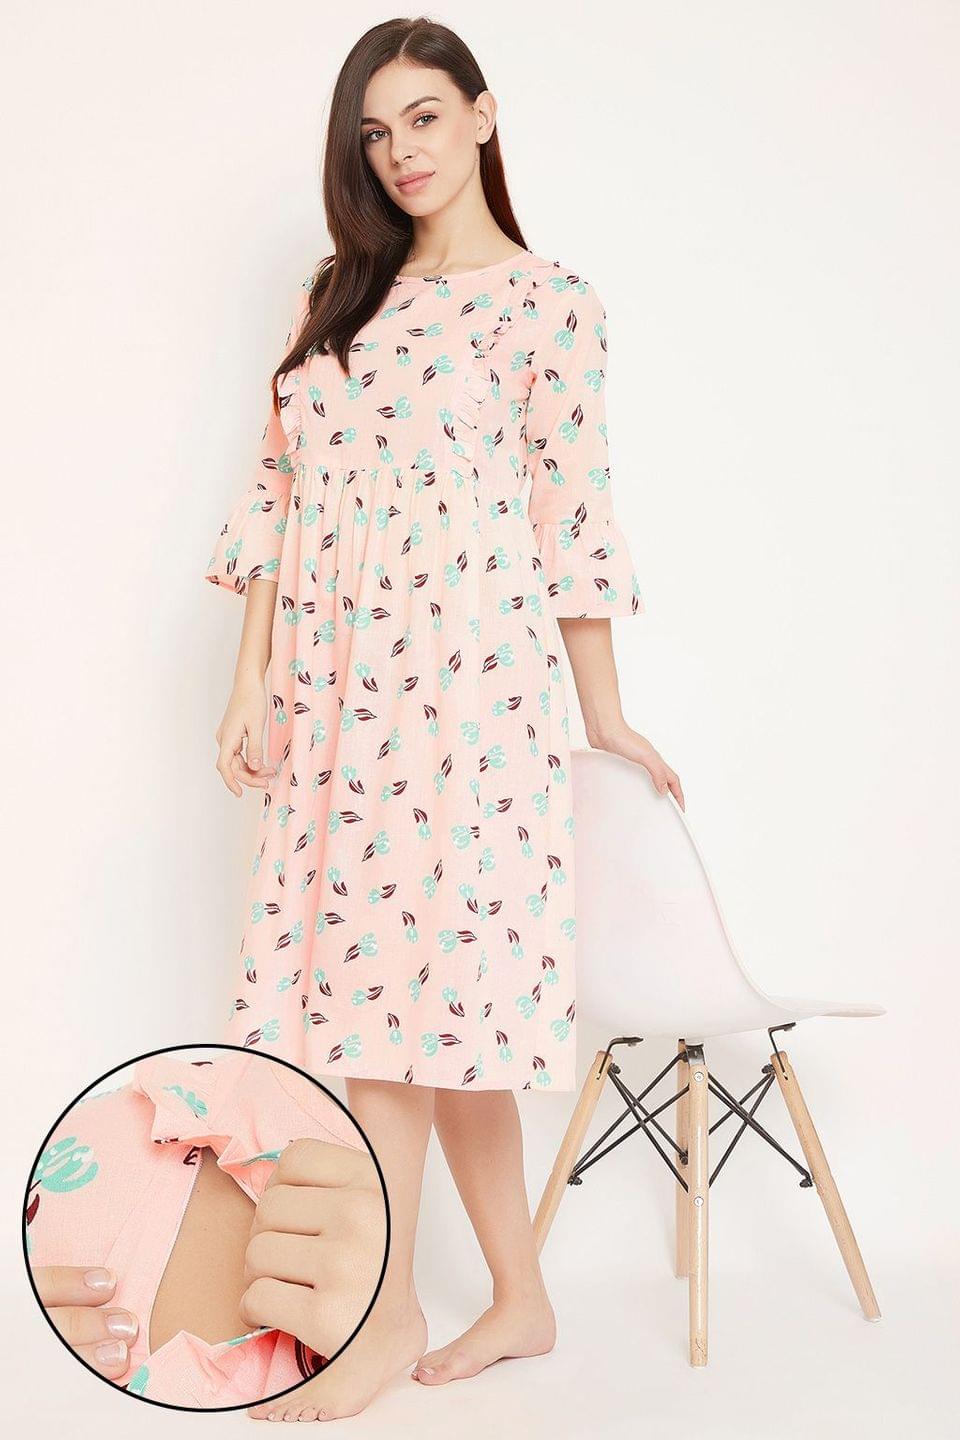 Clovia Feeding Print Me Pretty Mid Length Night Dress in Peach Pink -100% Cotton